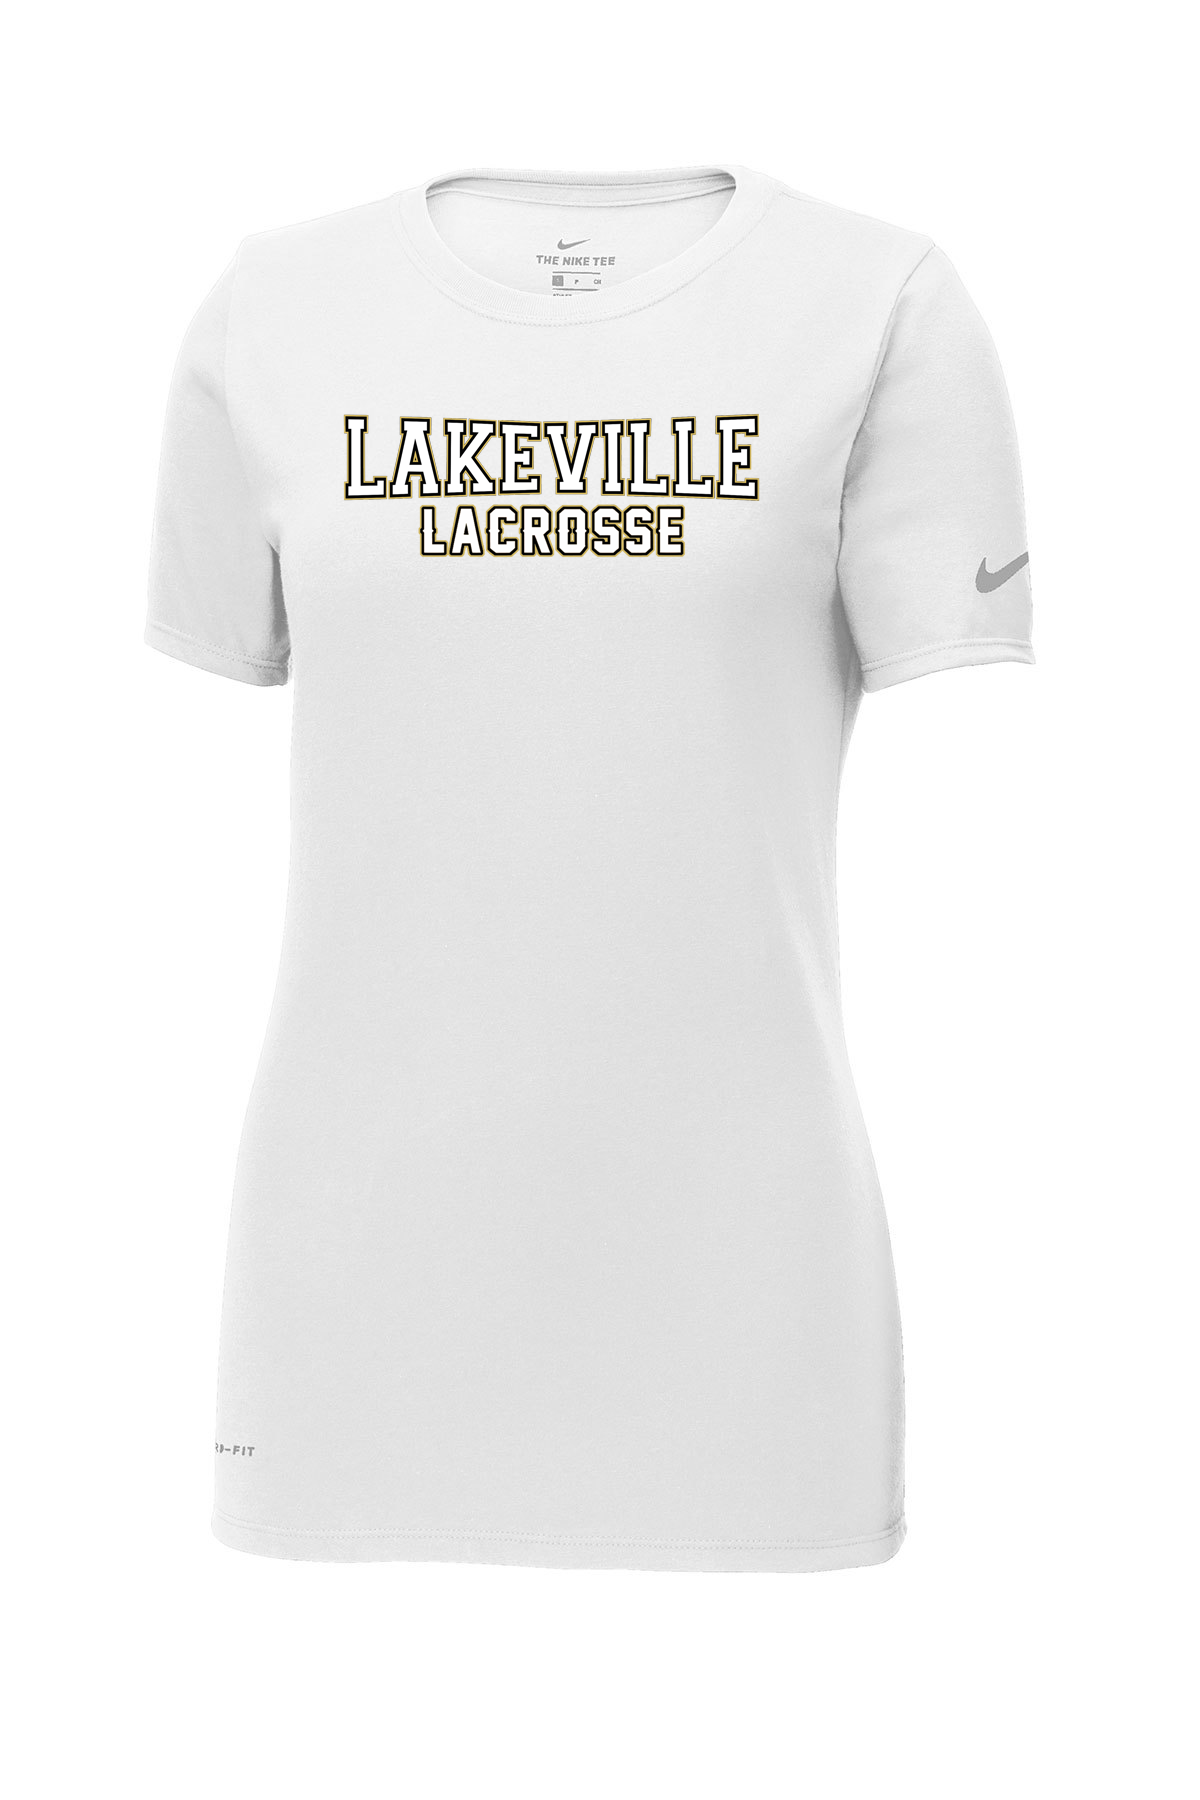 Lakeville Lacrosse Nike Ladies Dri-FIT Tee